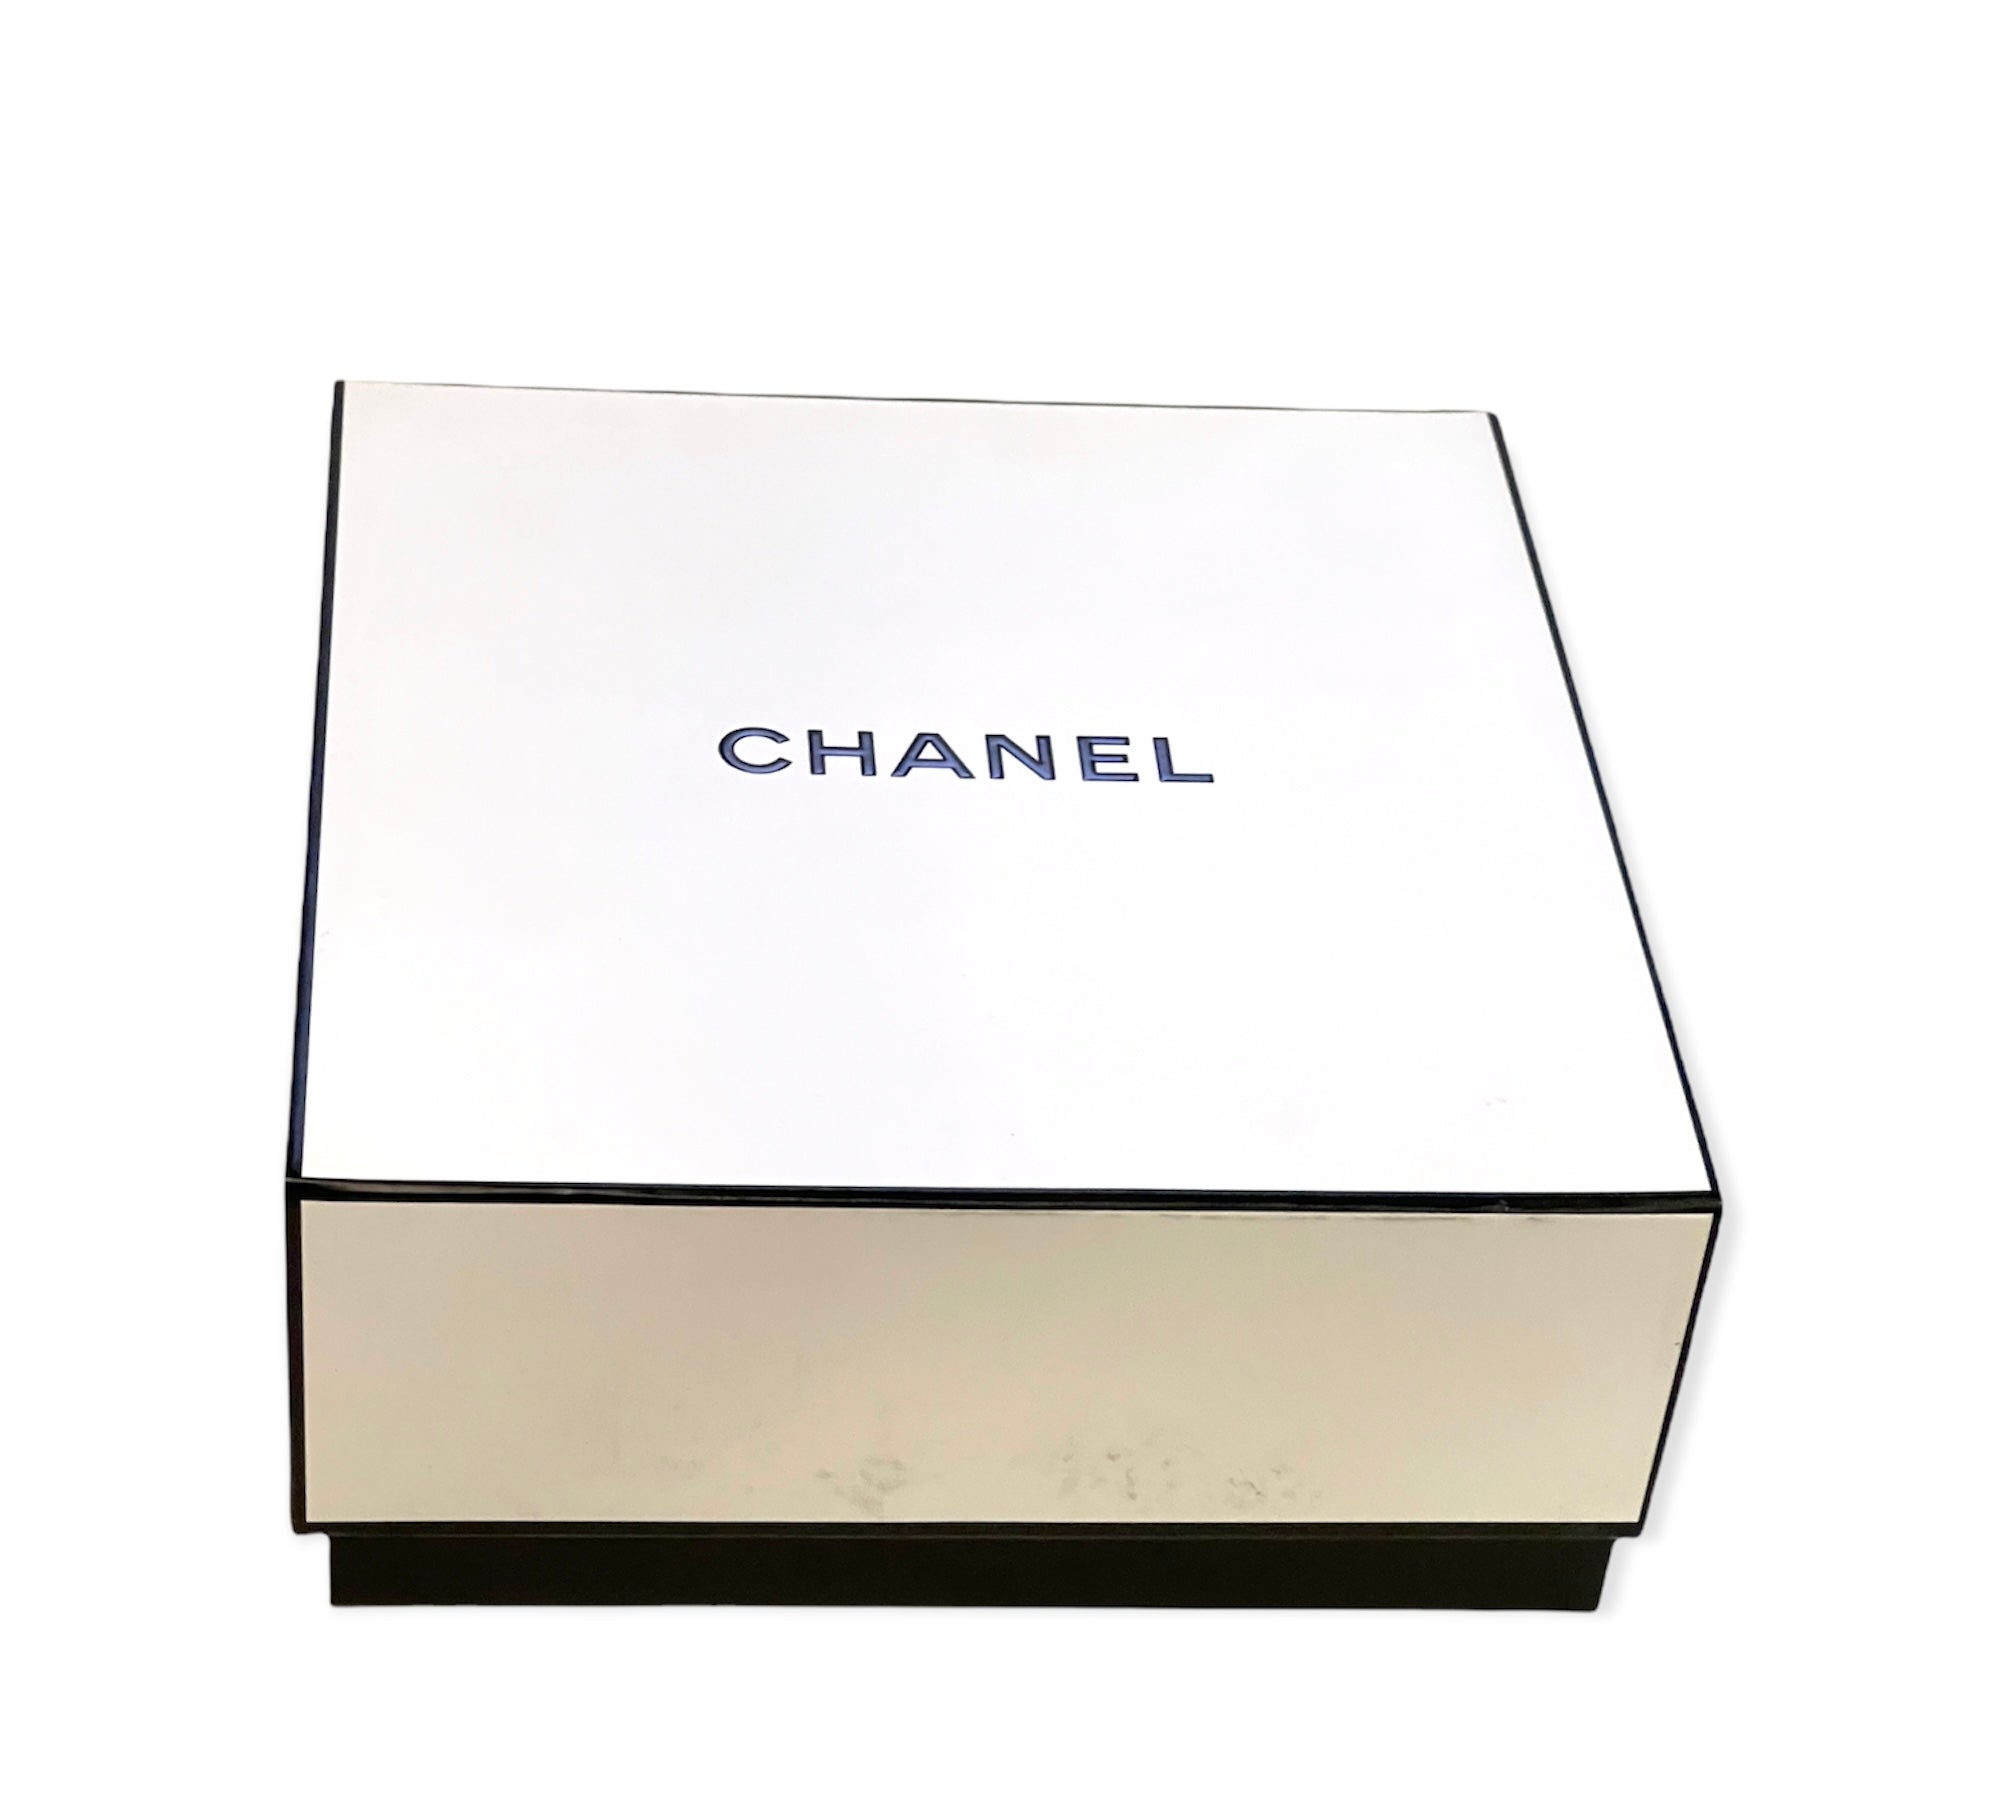 chanel mascara gift set